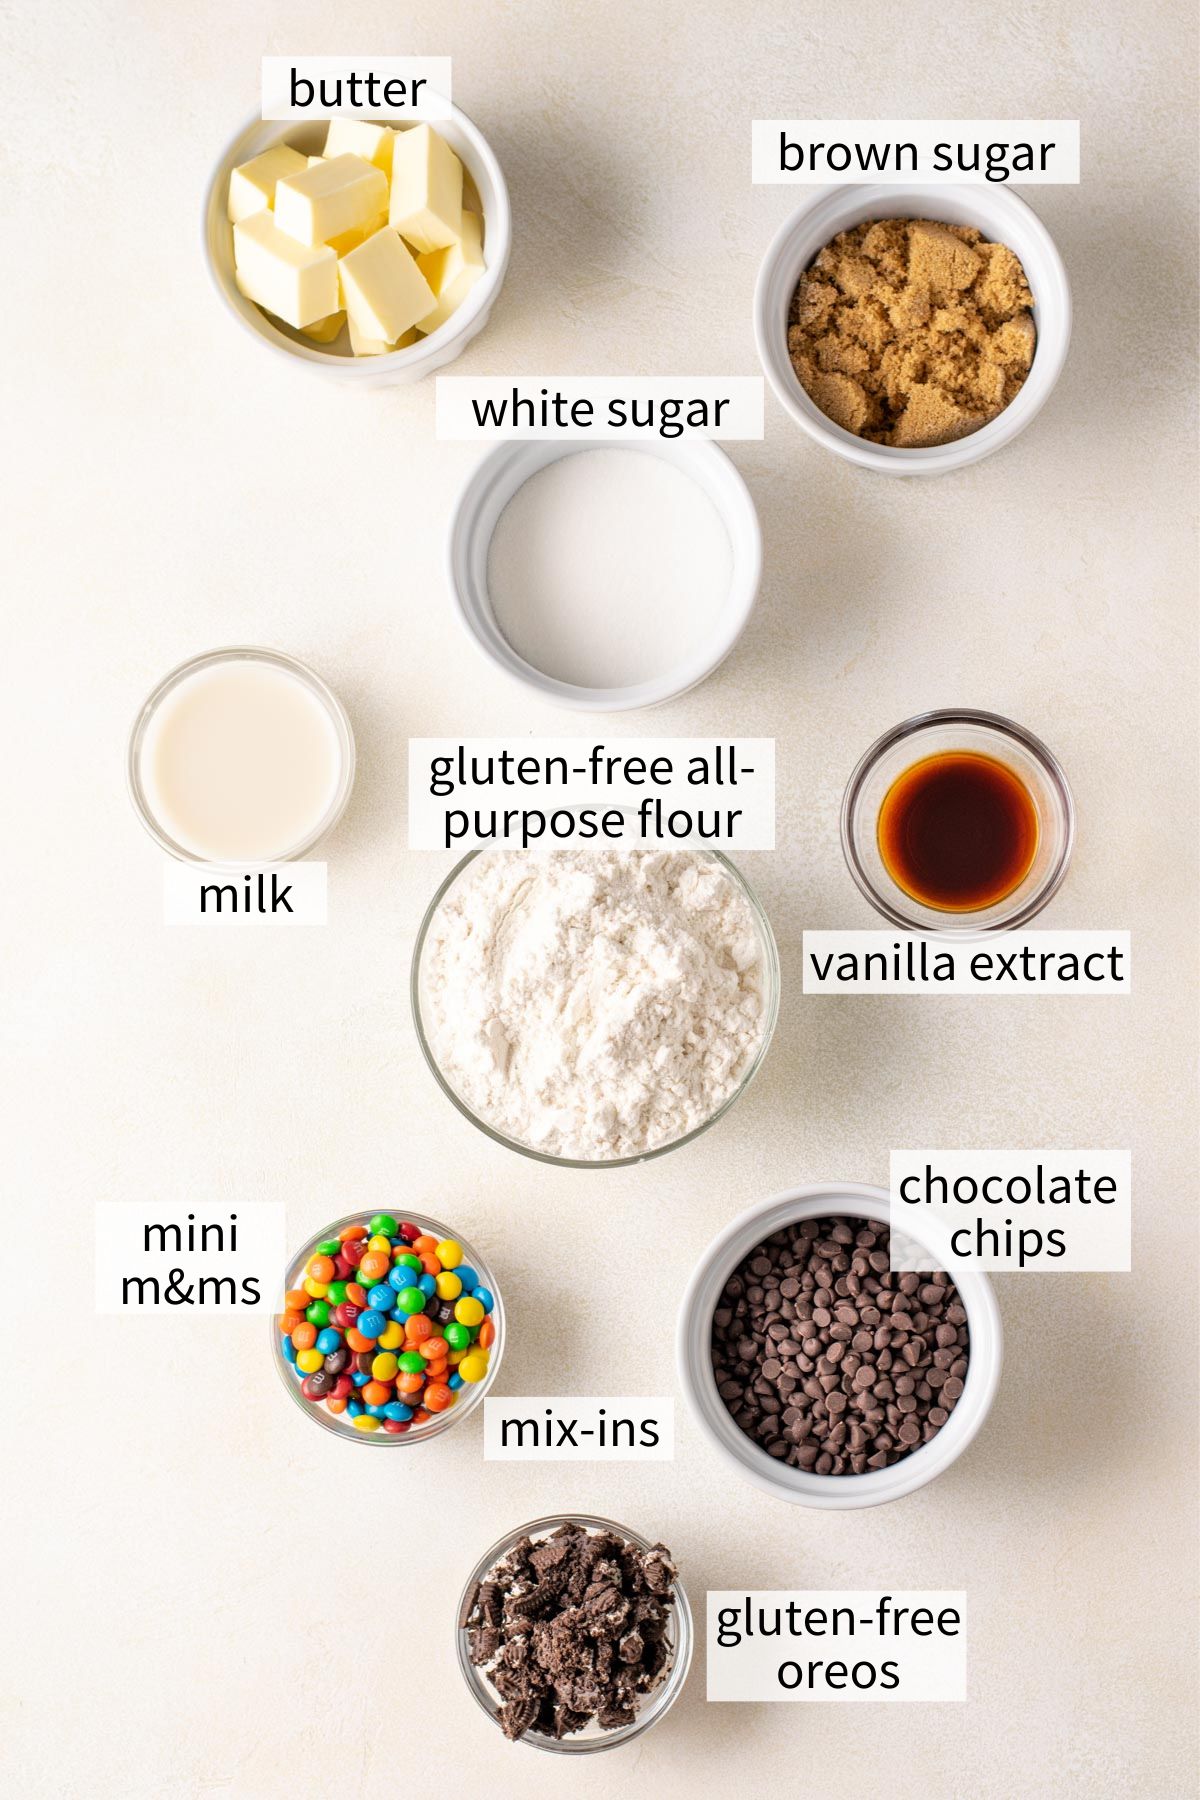 ingredients to make gluten-free edible cookie dough.